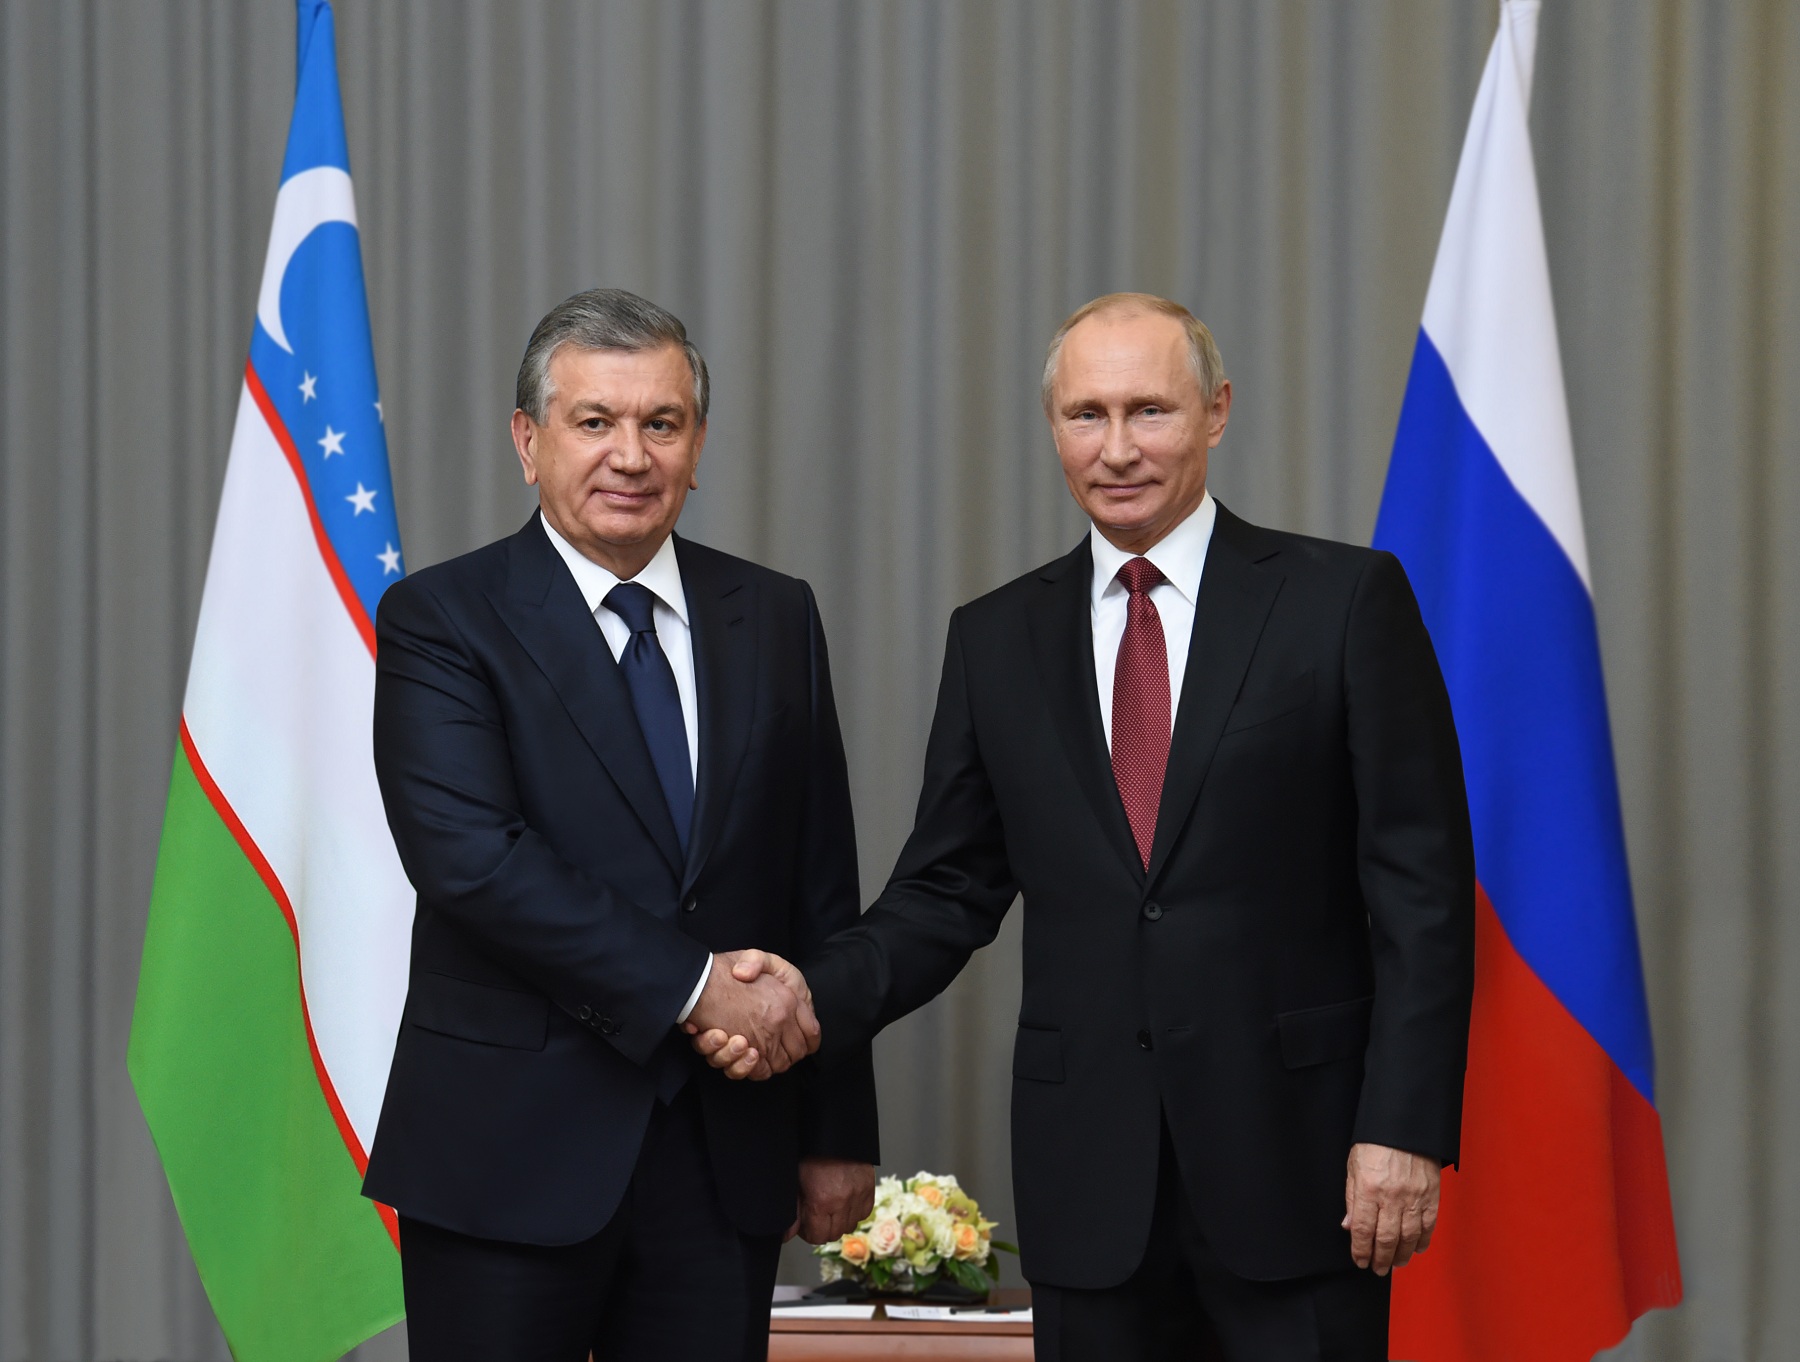 President Shavkat Mirziyoyev met with President Vladimir Putin